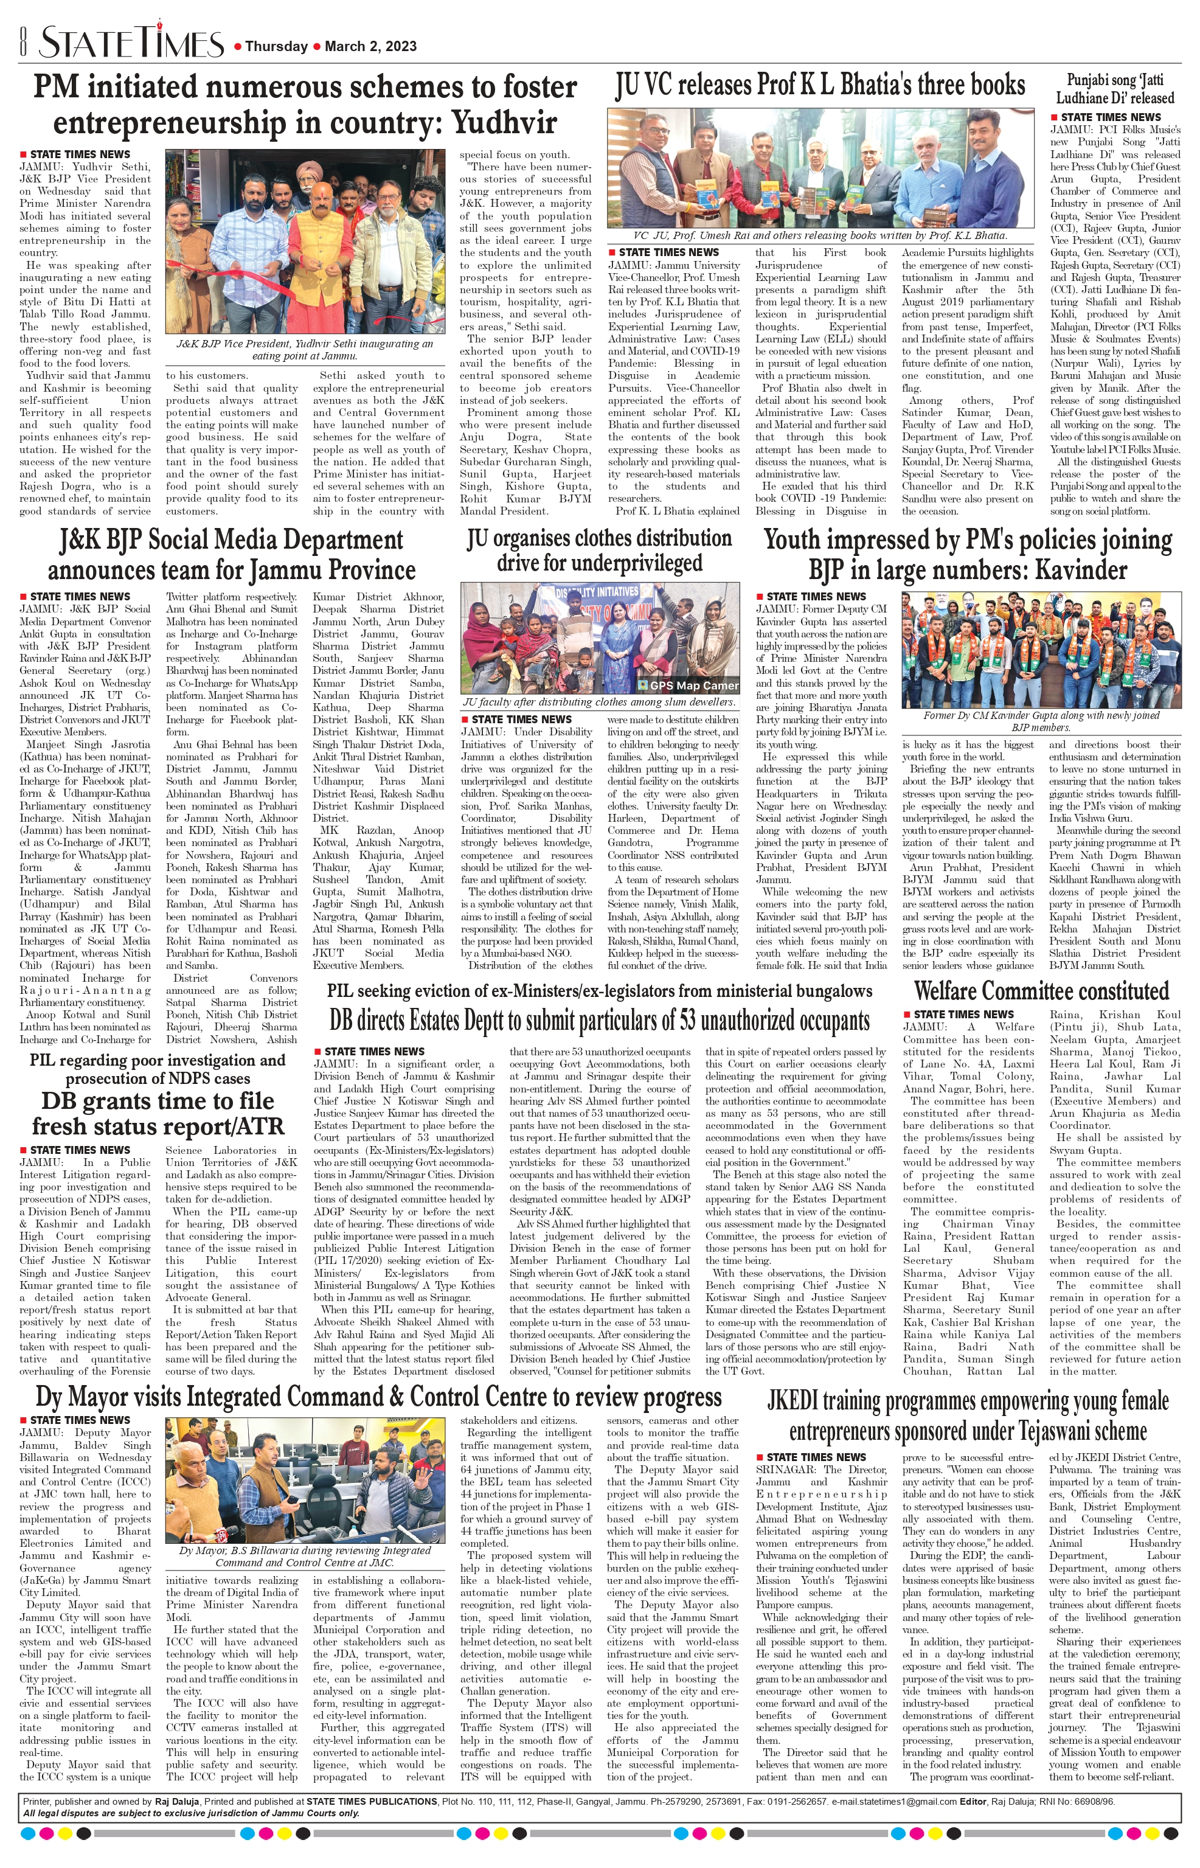 State Times: ePaper, Newspaper, Jammu News Paper, Newspaper in English,  Kashmir English Newspaper, StateTimes